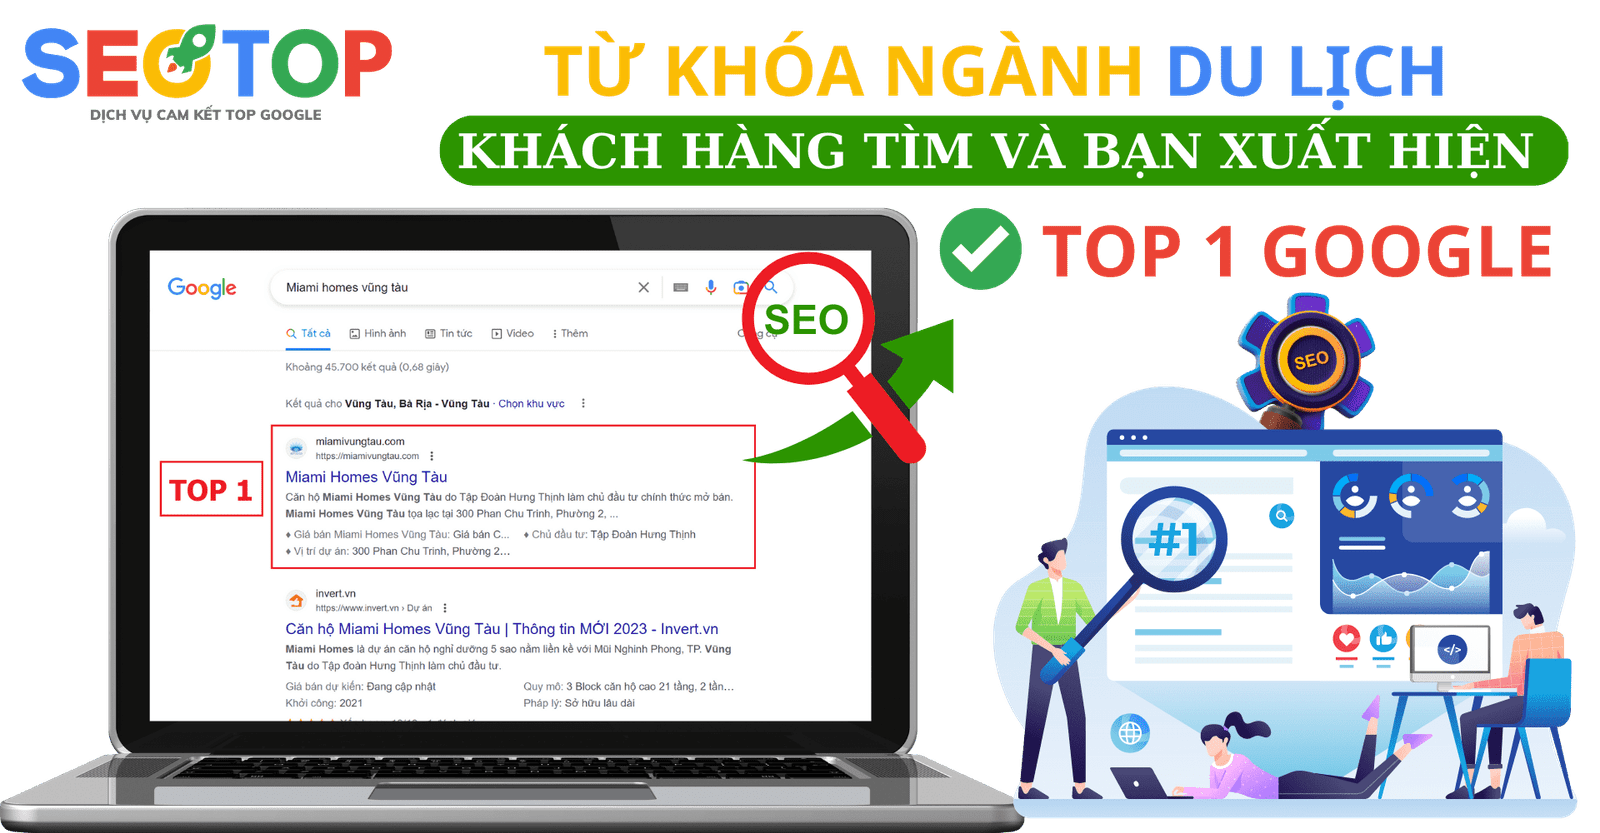 Seo website lên top 1 google dichvuseotop.com.vn đã triễn khai